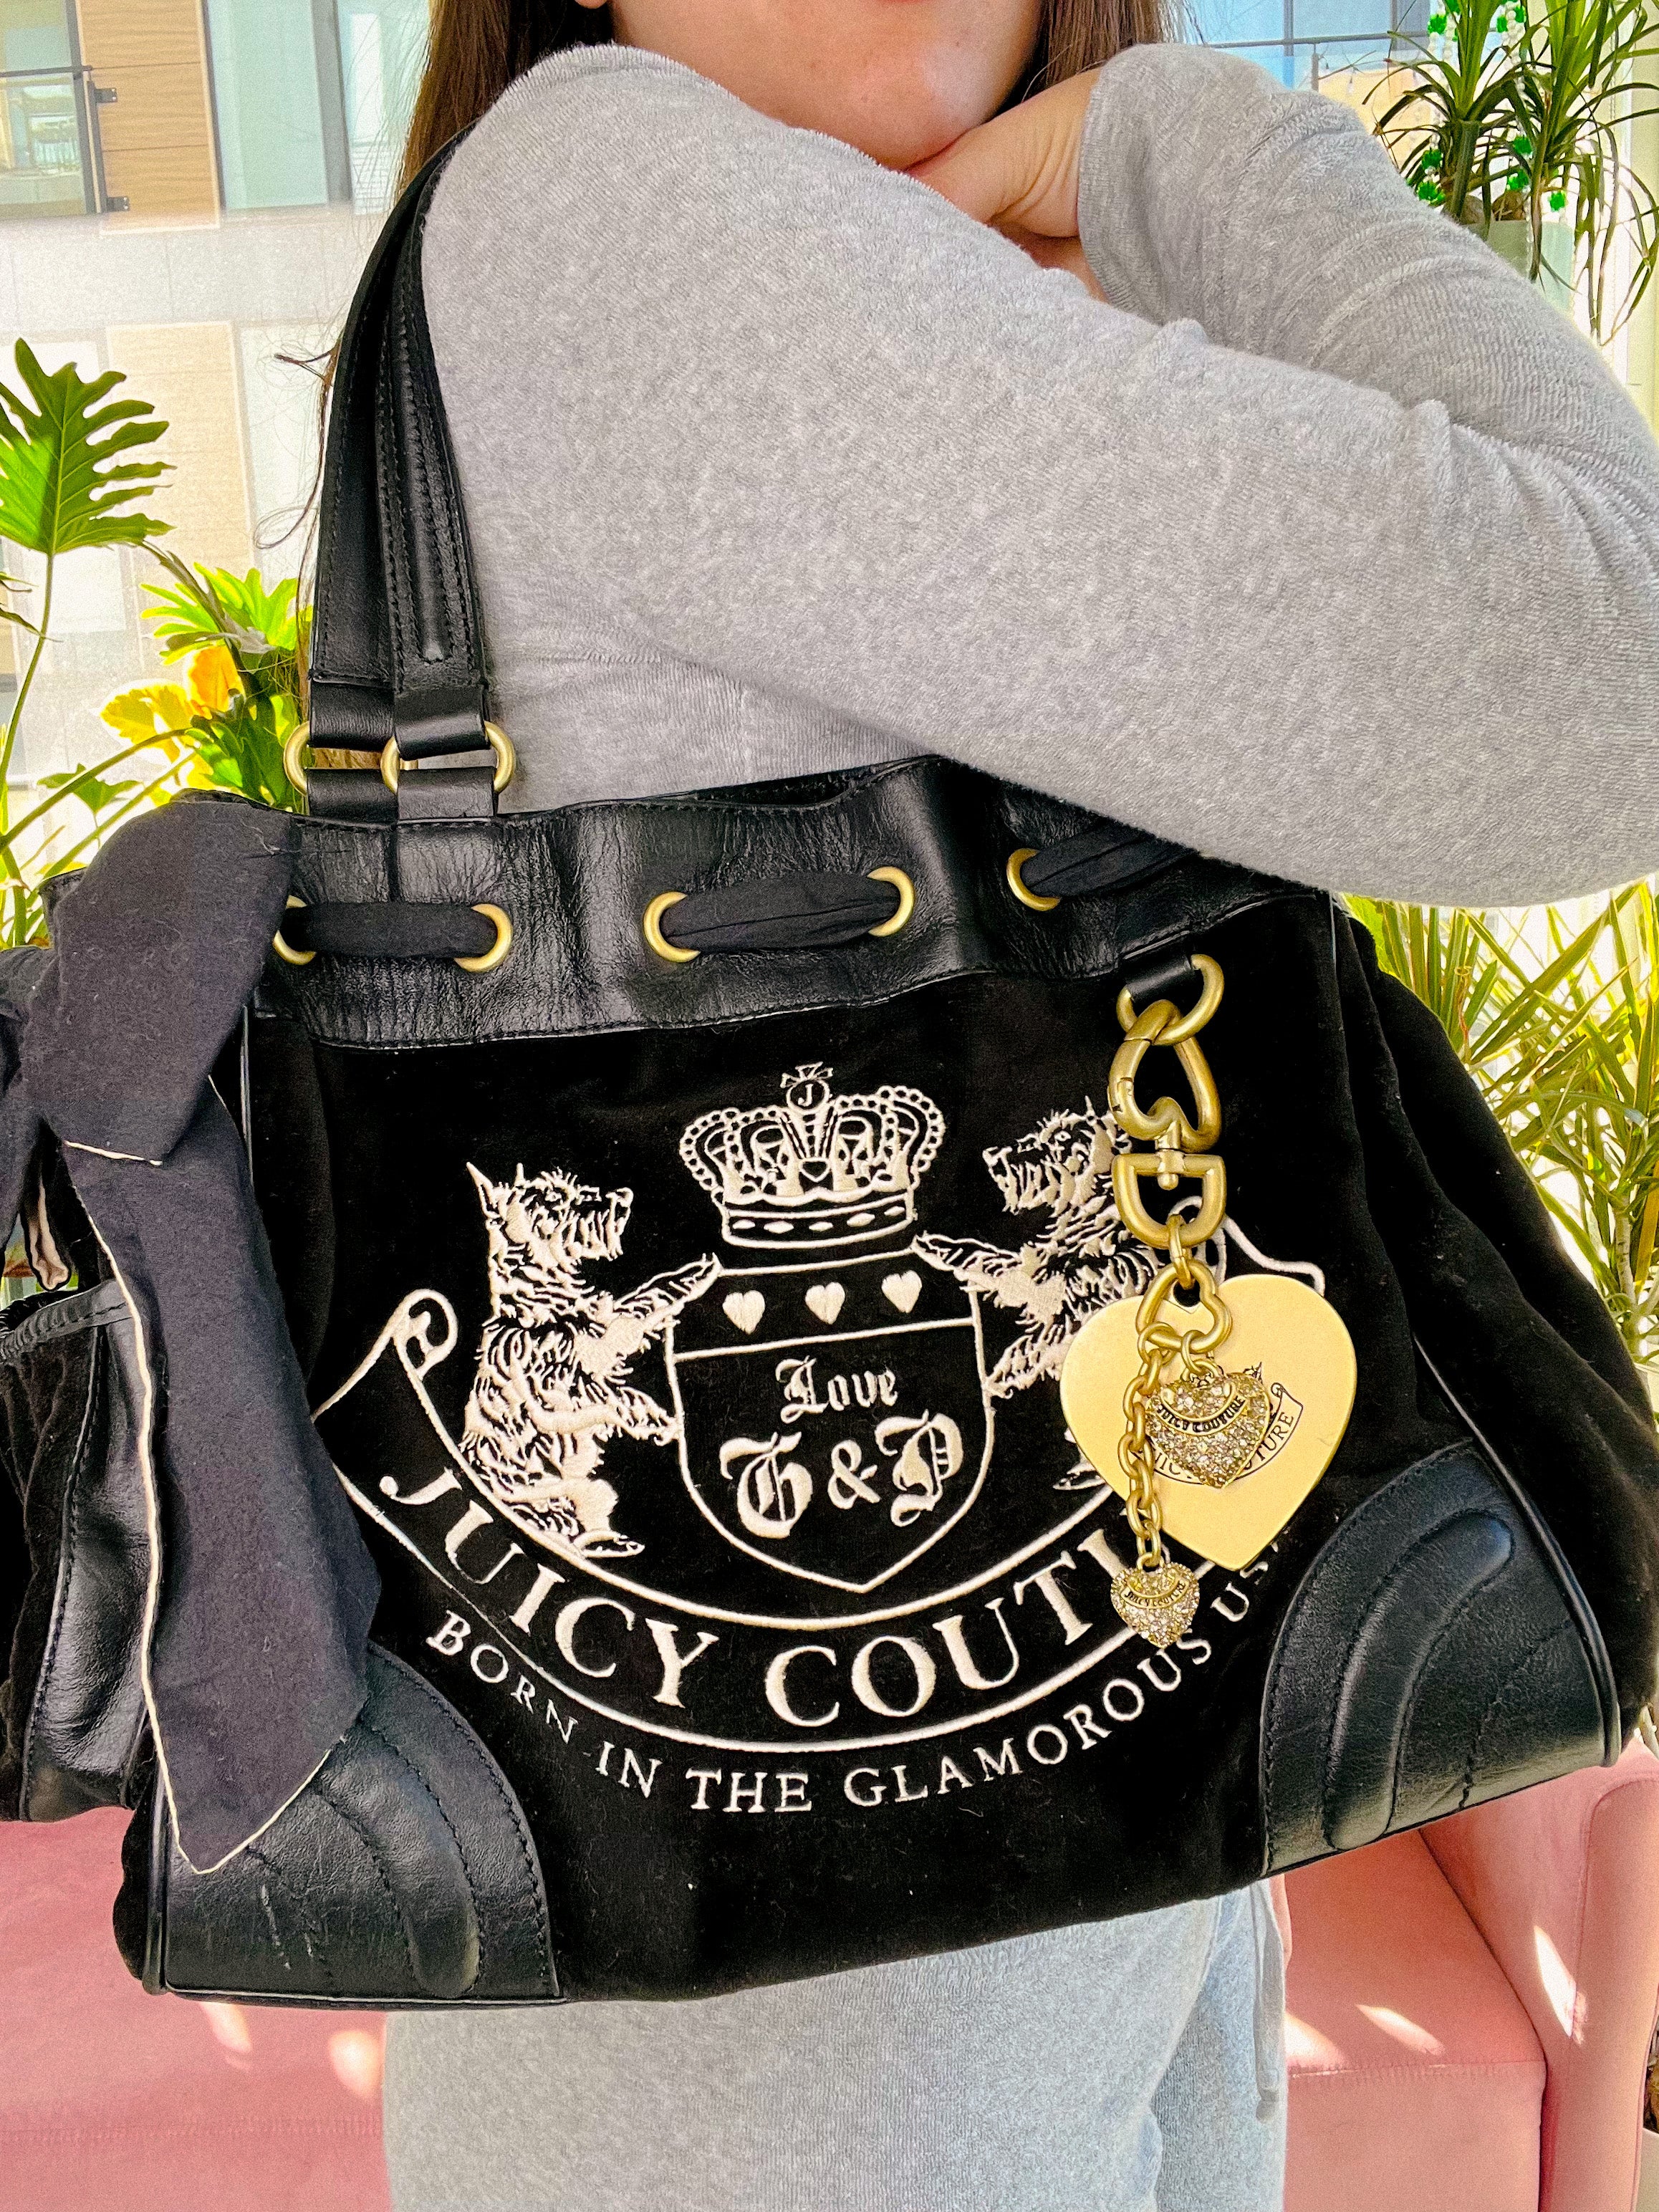 Juicy Couture Women's Shoulder Bag